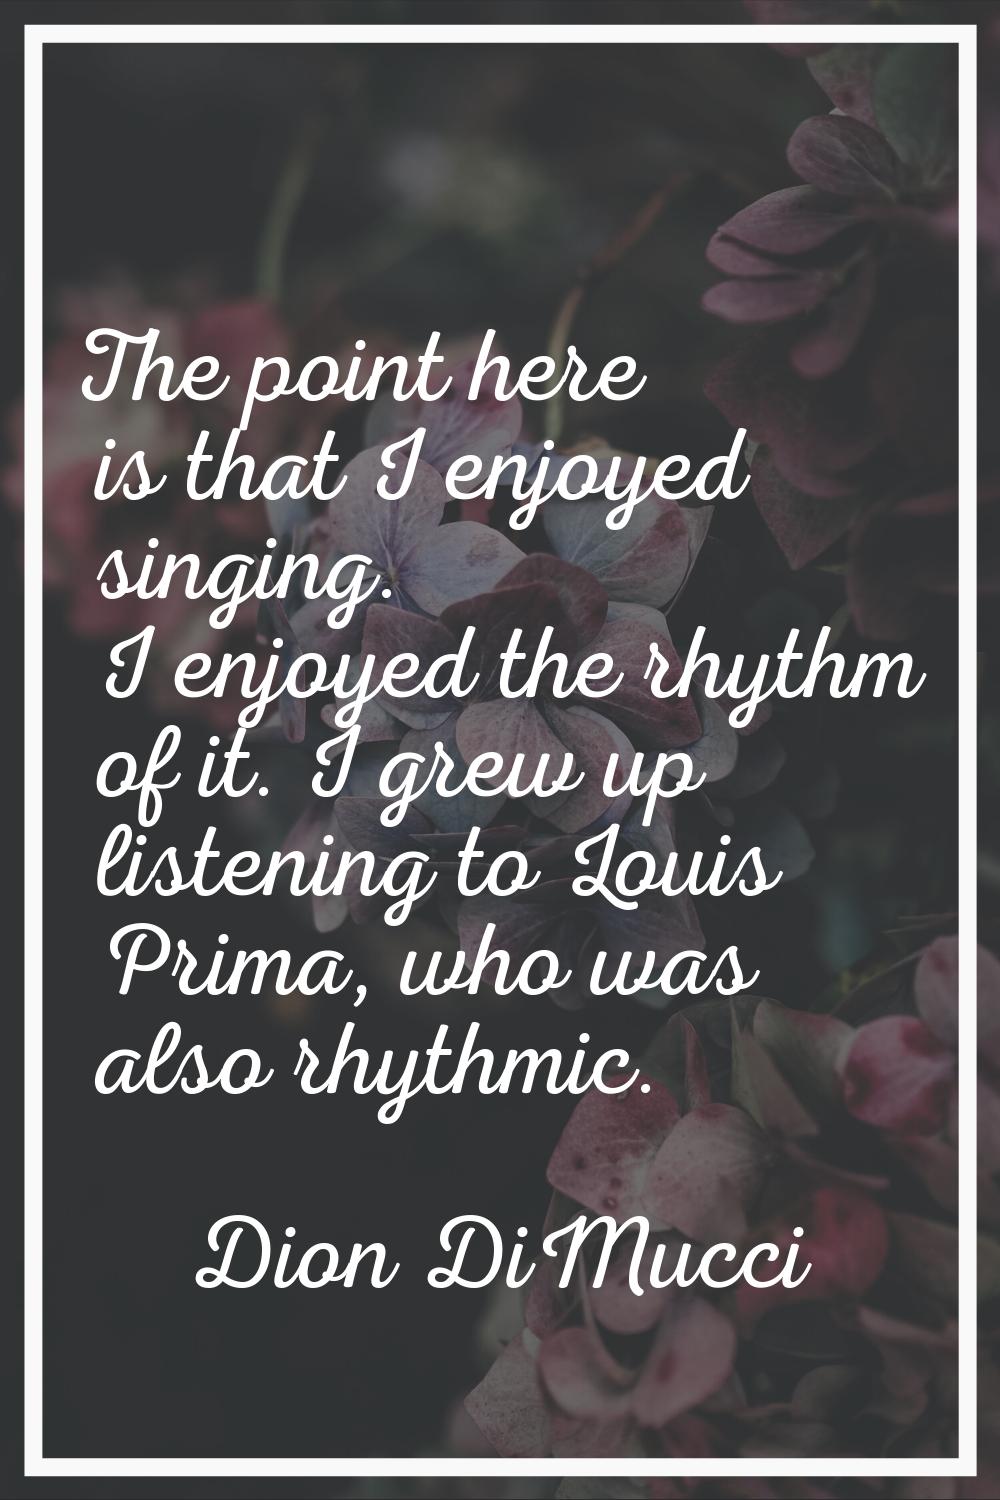 The point here is that I enjoyed singing. I enjoyed the rhythm of it. I grew up listening to Louis 